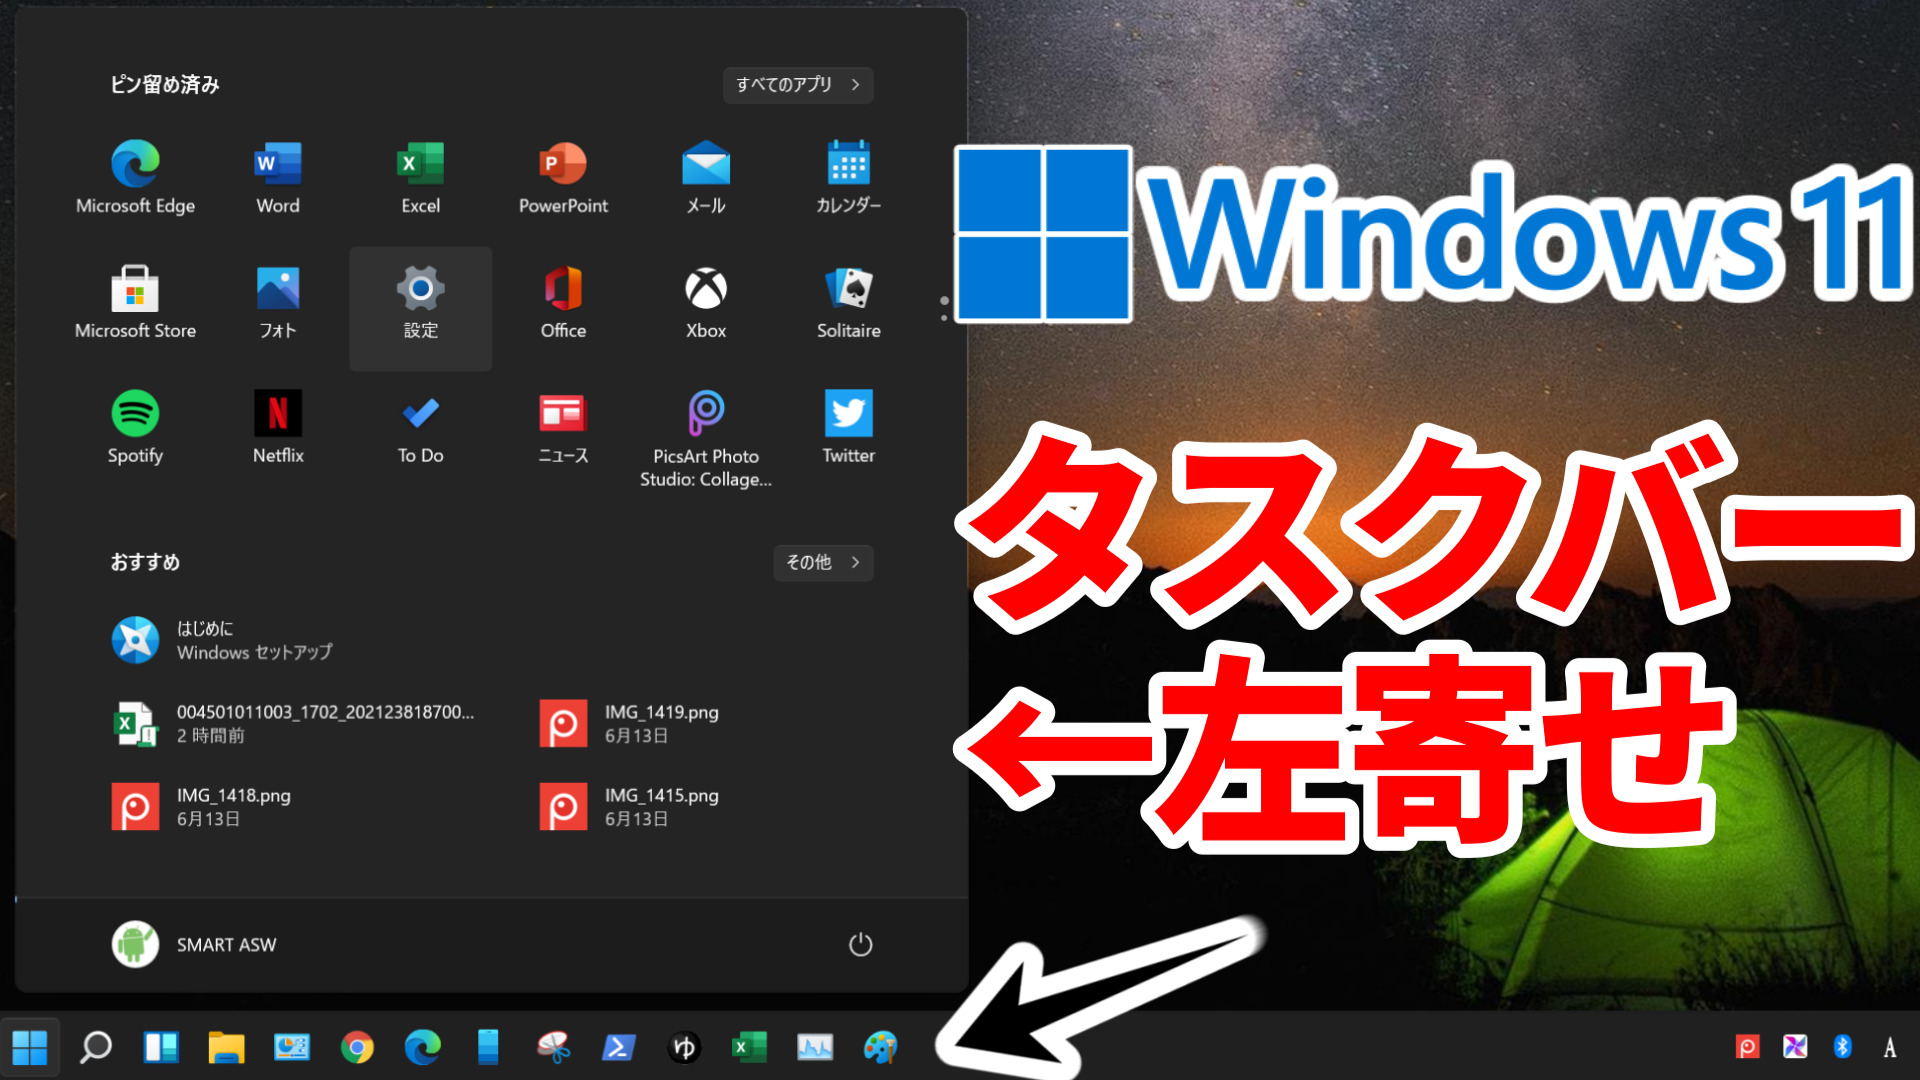 Windows 11 Smart Asw - Gambaran